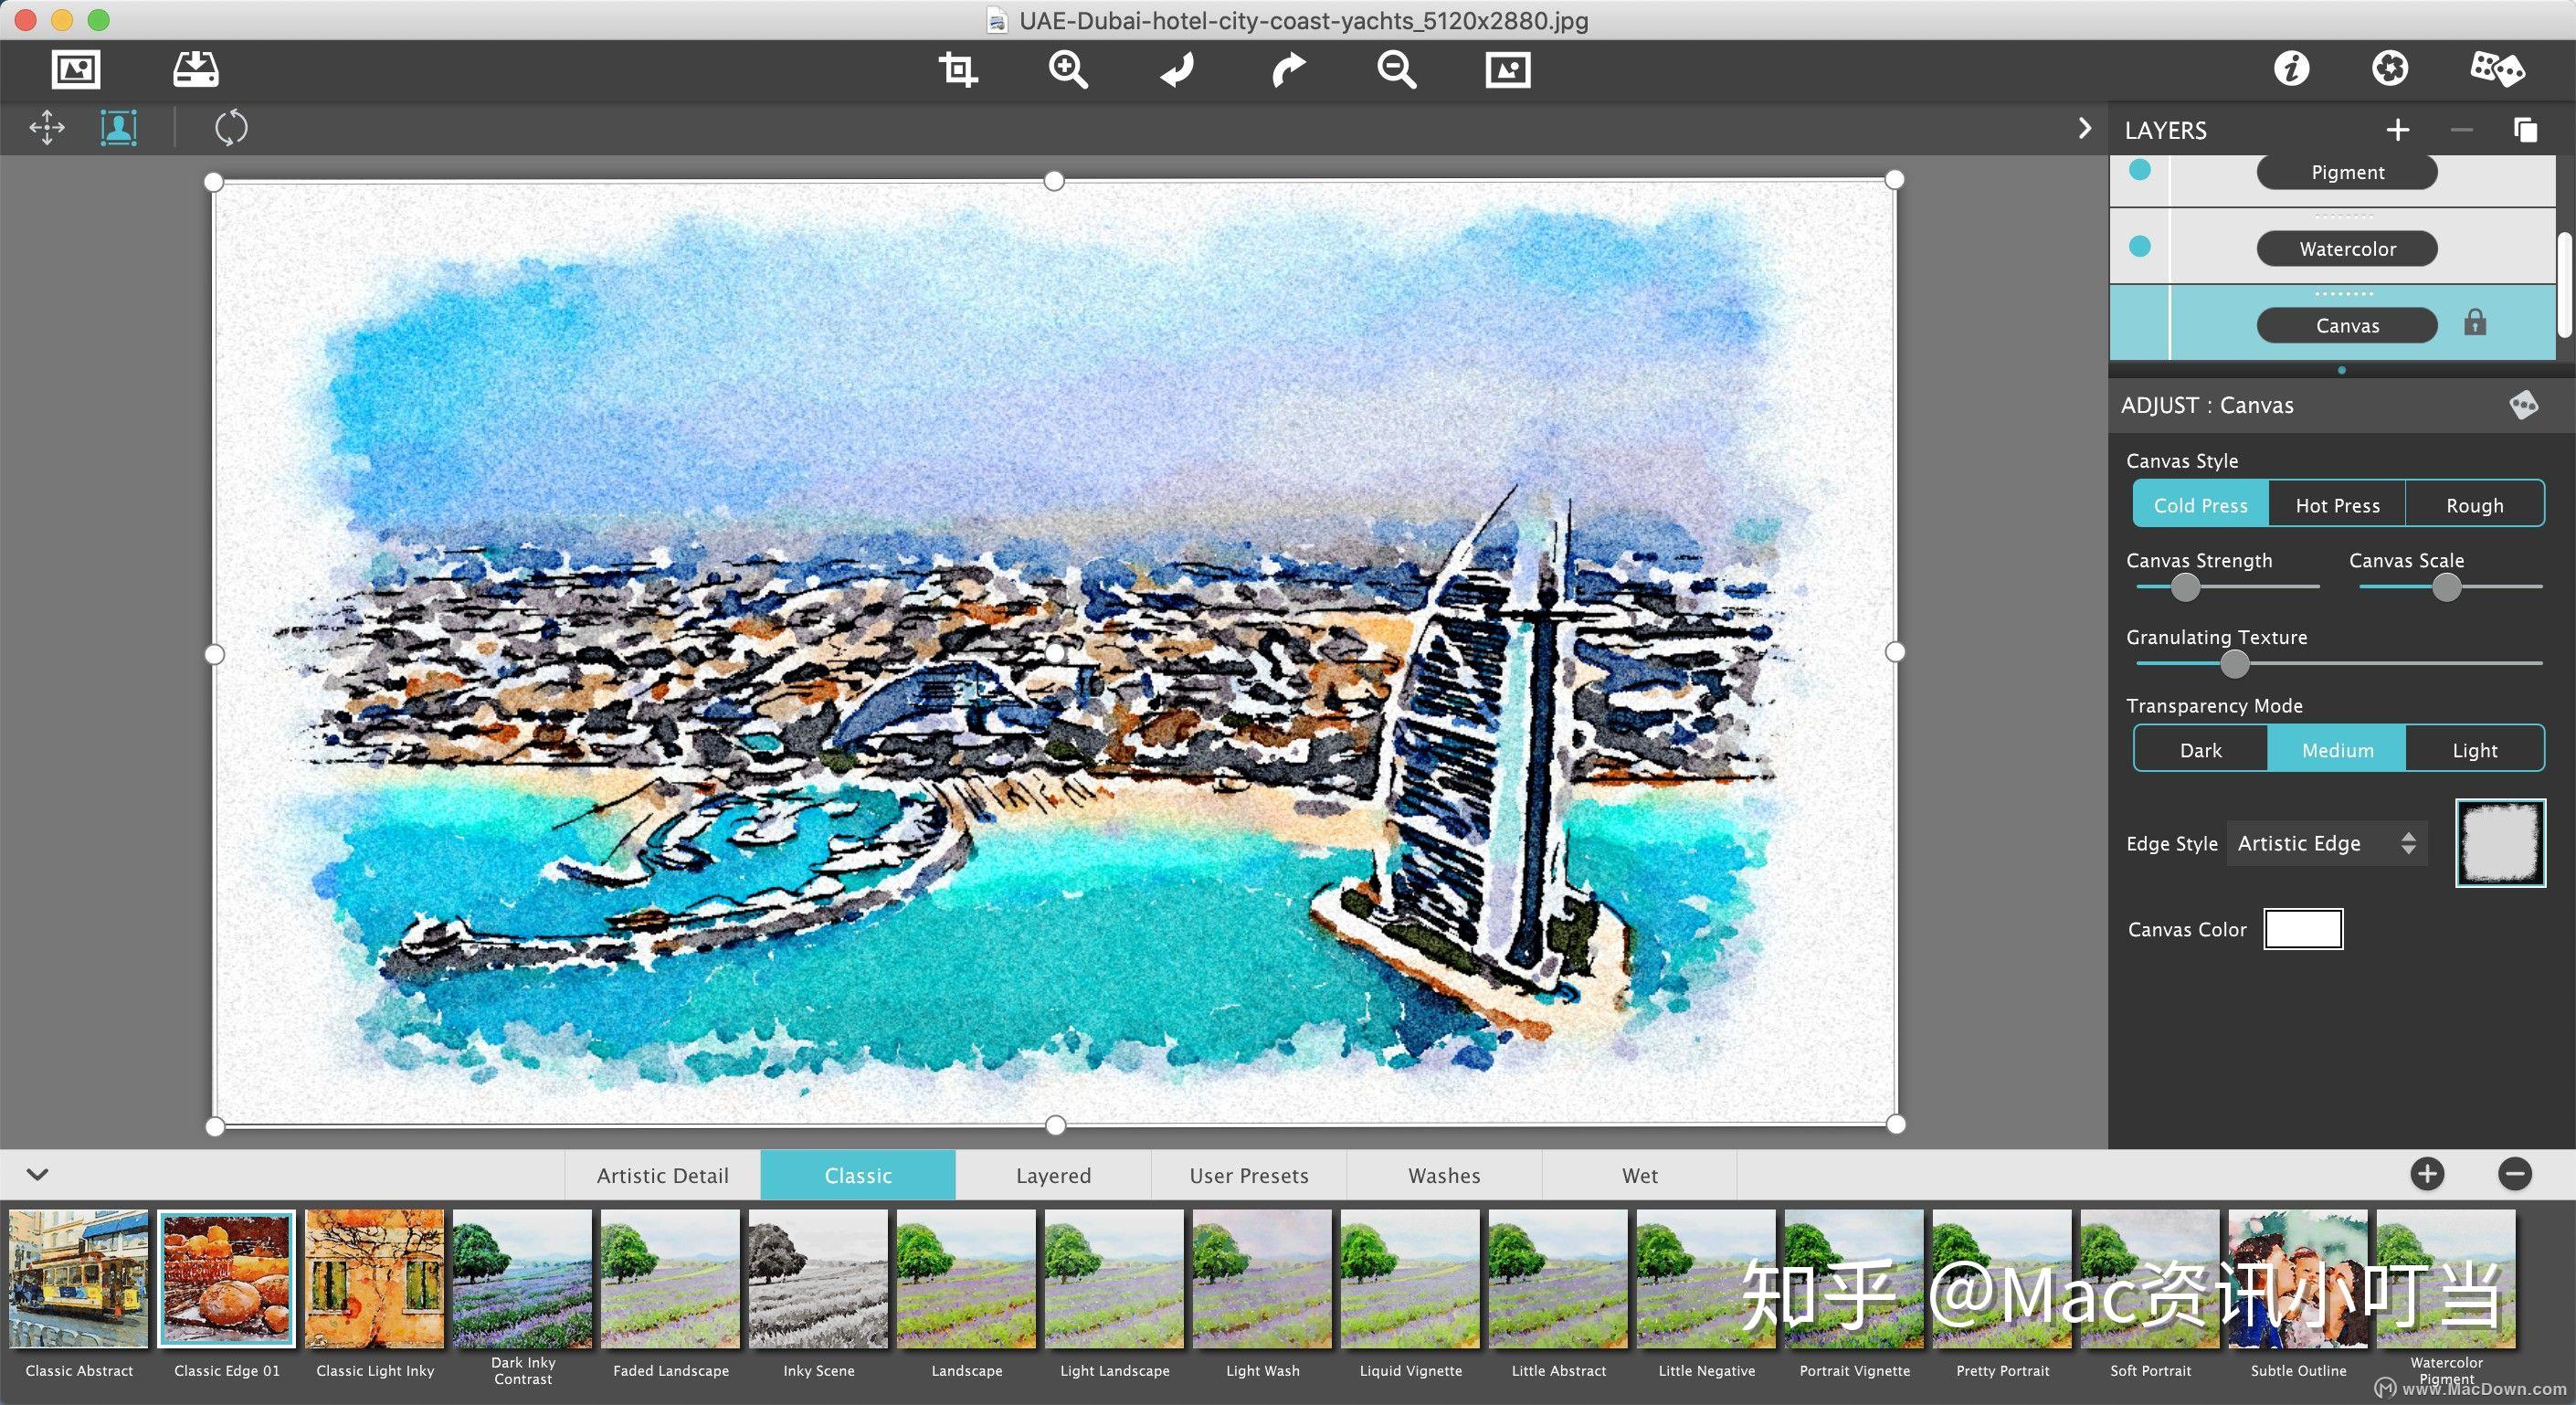 Jixipix Watercolor Studio 1.4.17 download the last version for ipod